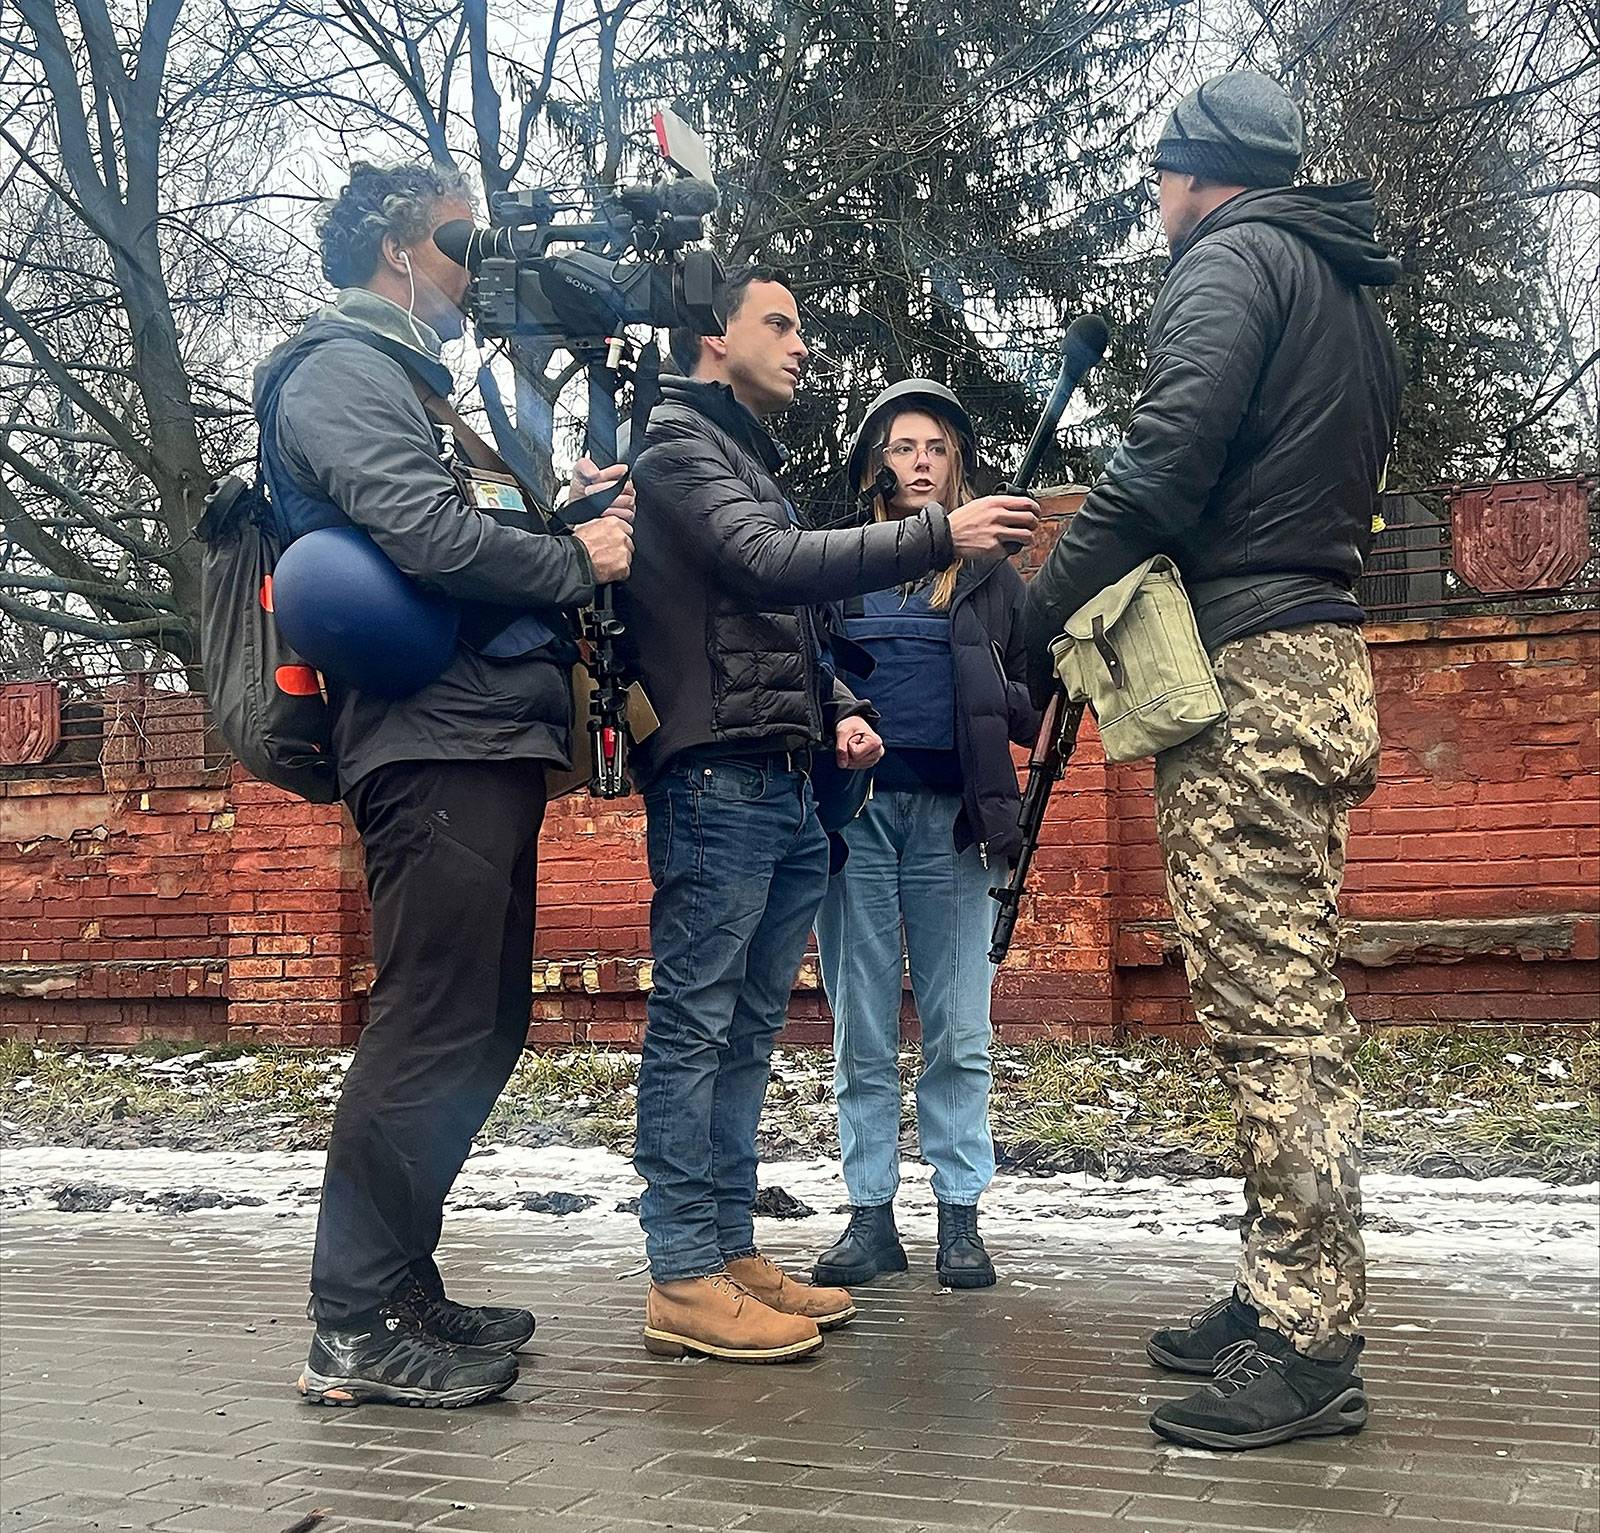 Ukrainian journalist Oleksandra Kuvshynova works with Fox journalist Trey Yingst and cameraperson Pierre Zakrzewski in this undated photo taken in Ukraine.